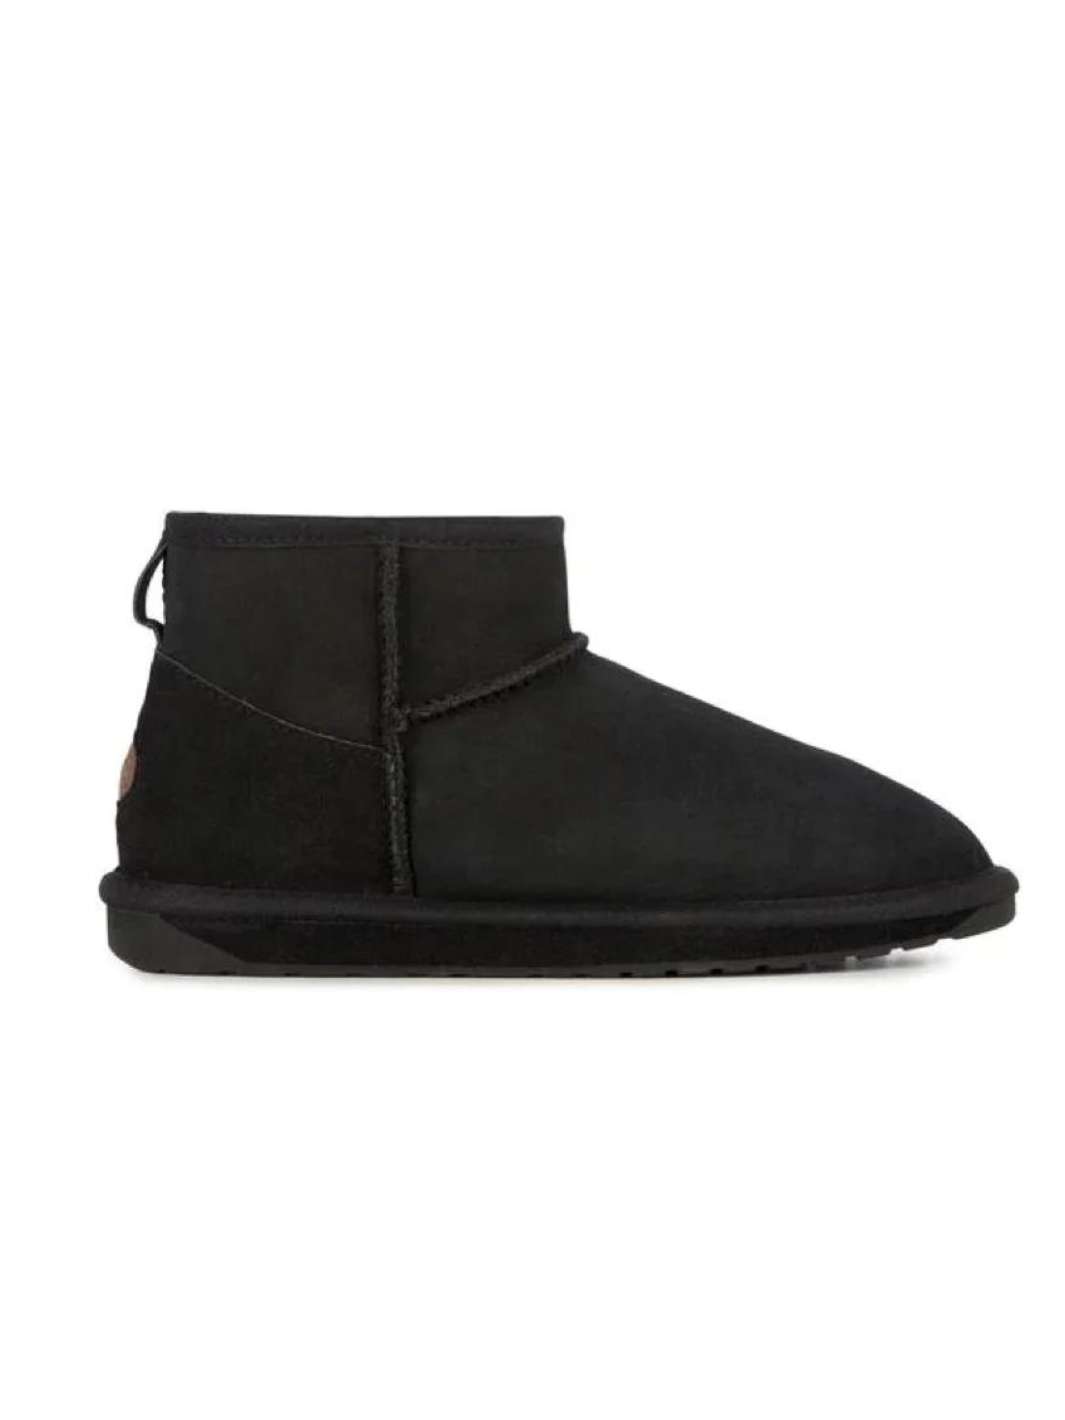 EMU Shoes Boots | Stinger Micro Black